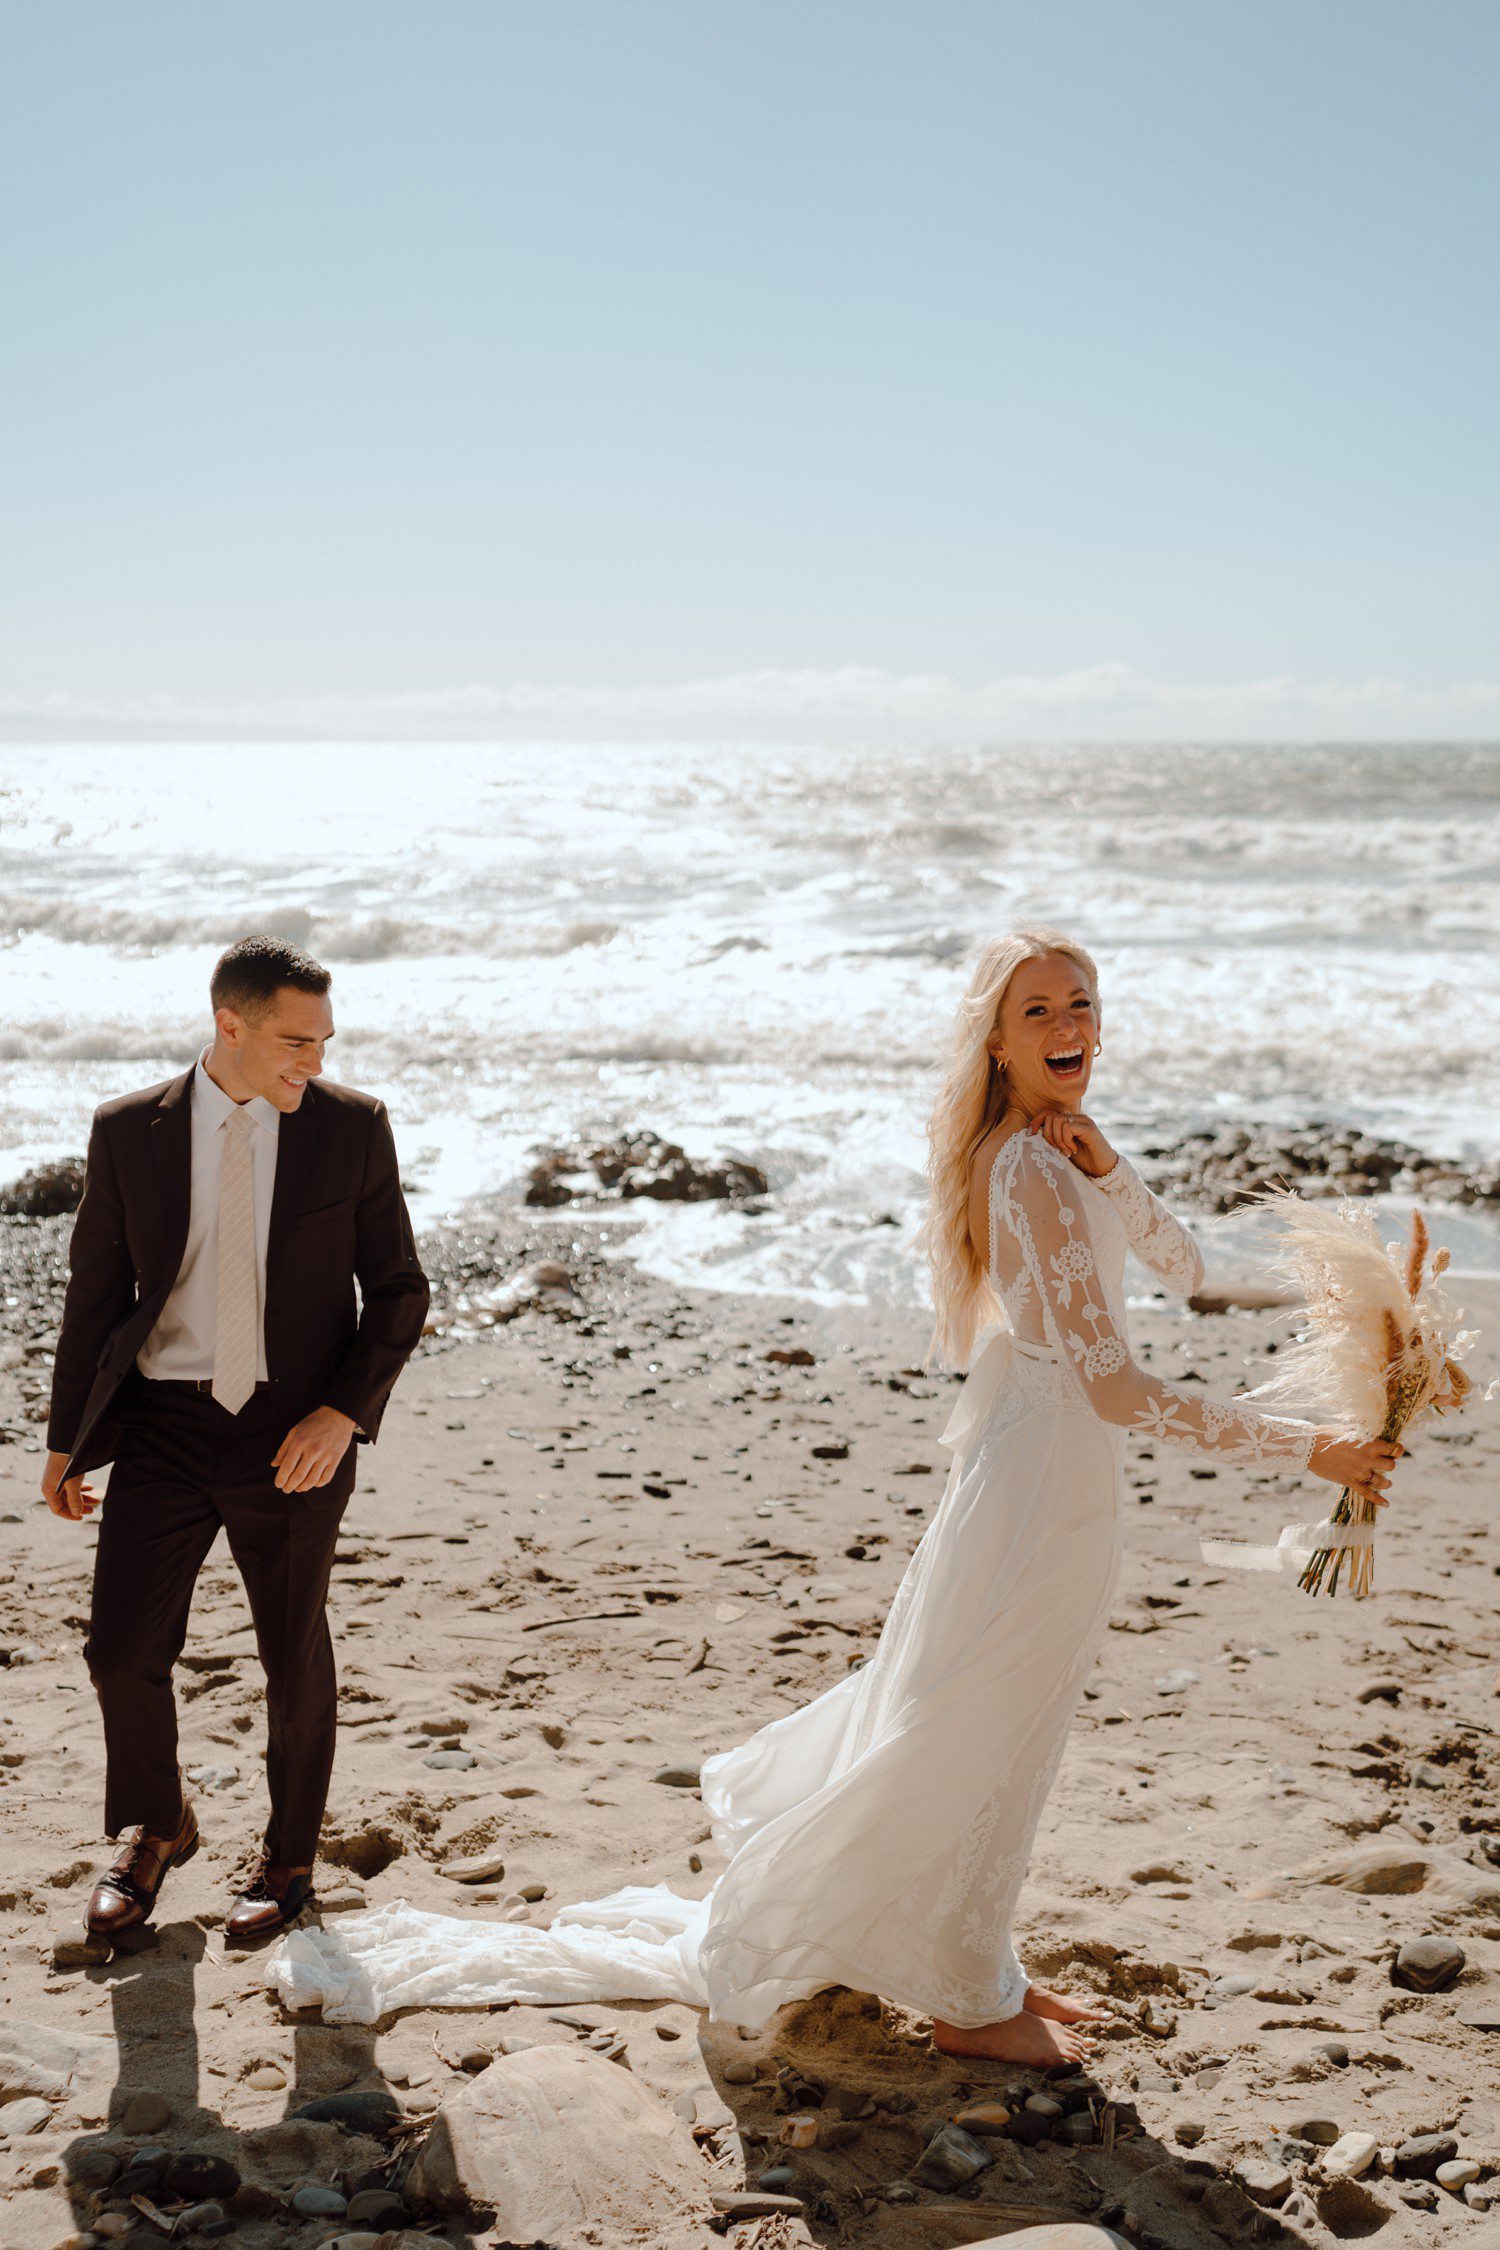 Wedding first look on the beach in Santa Barbara, CA. 